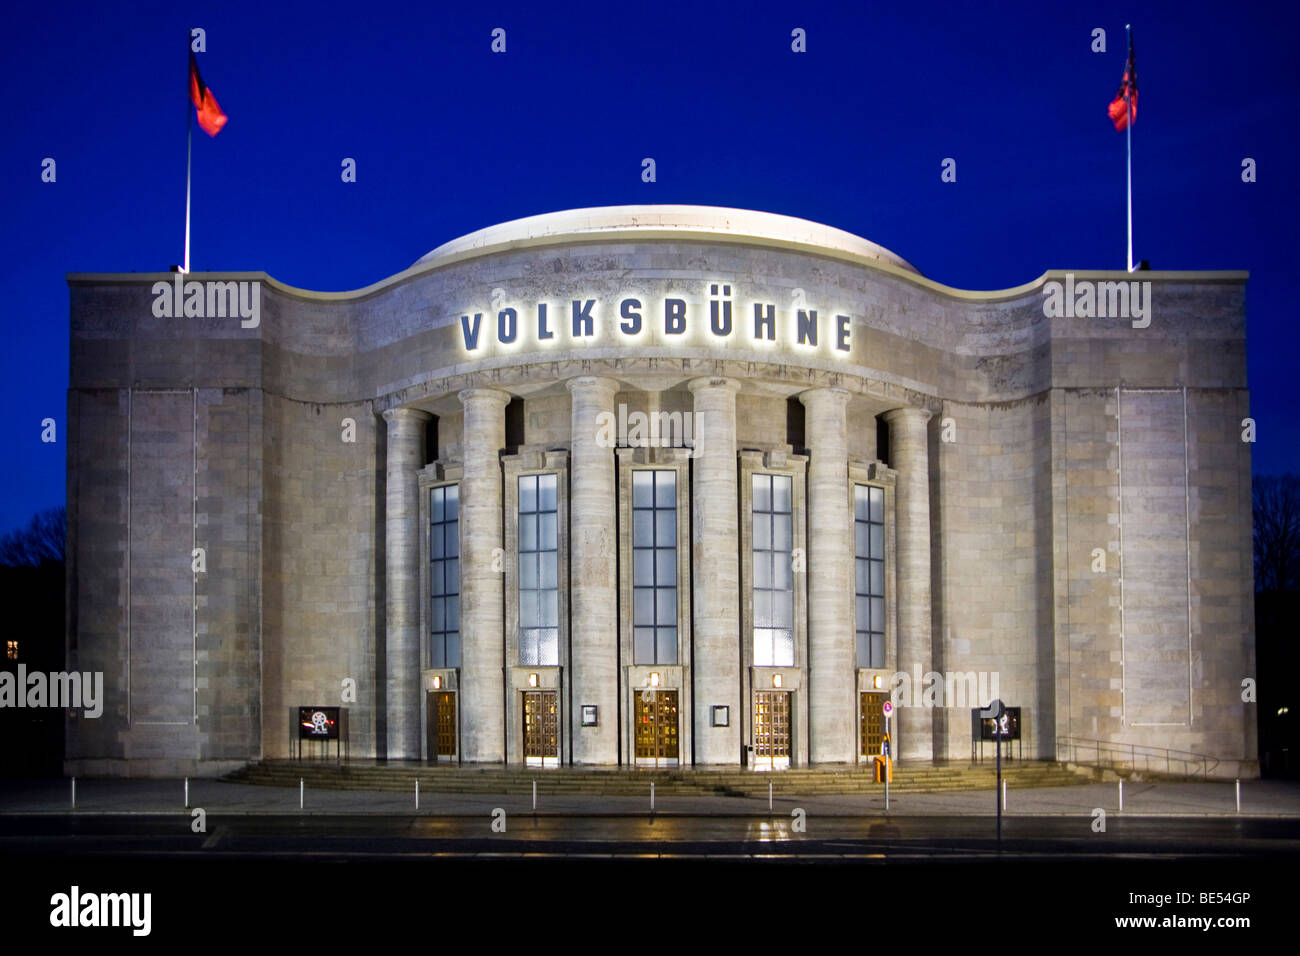 Volksbuehne Theatre, Rosa-Luxemburg-Platz, Mitte, Berlin, Germany, Europe Stock Photo